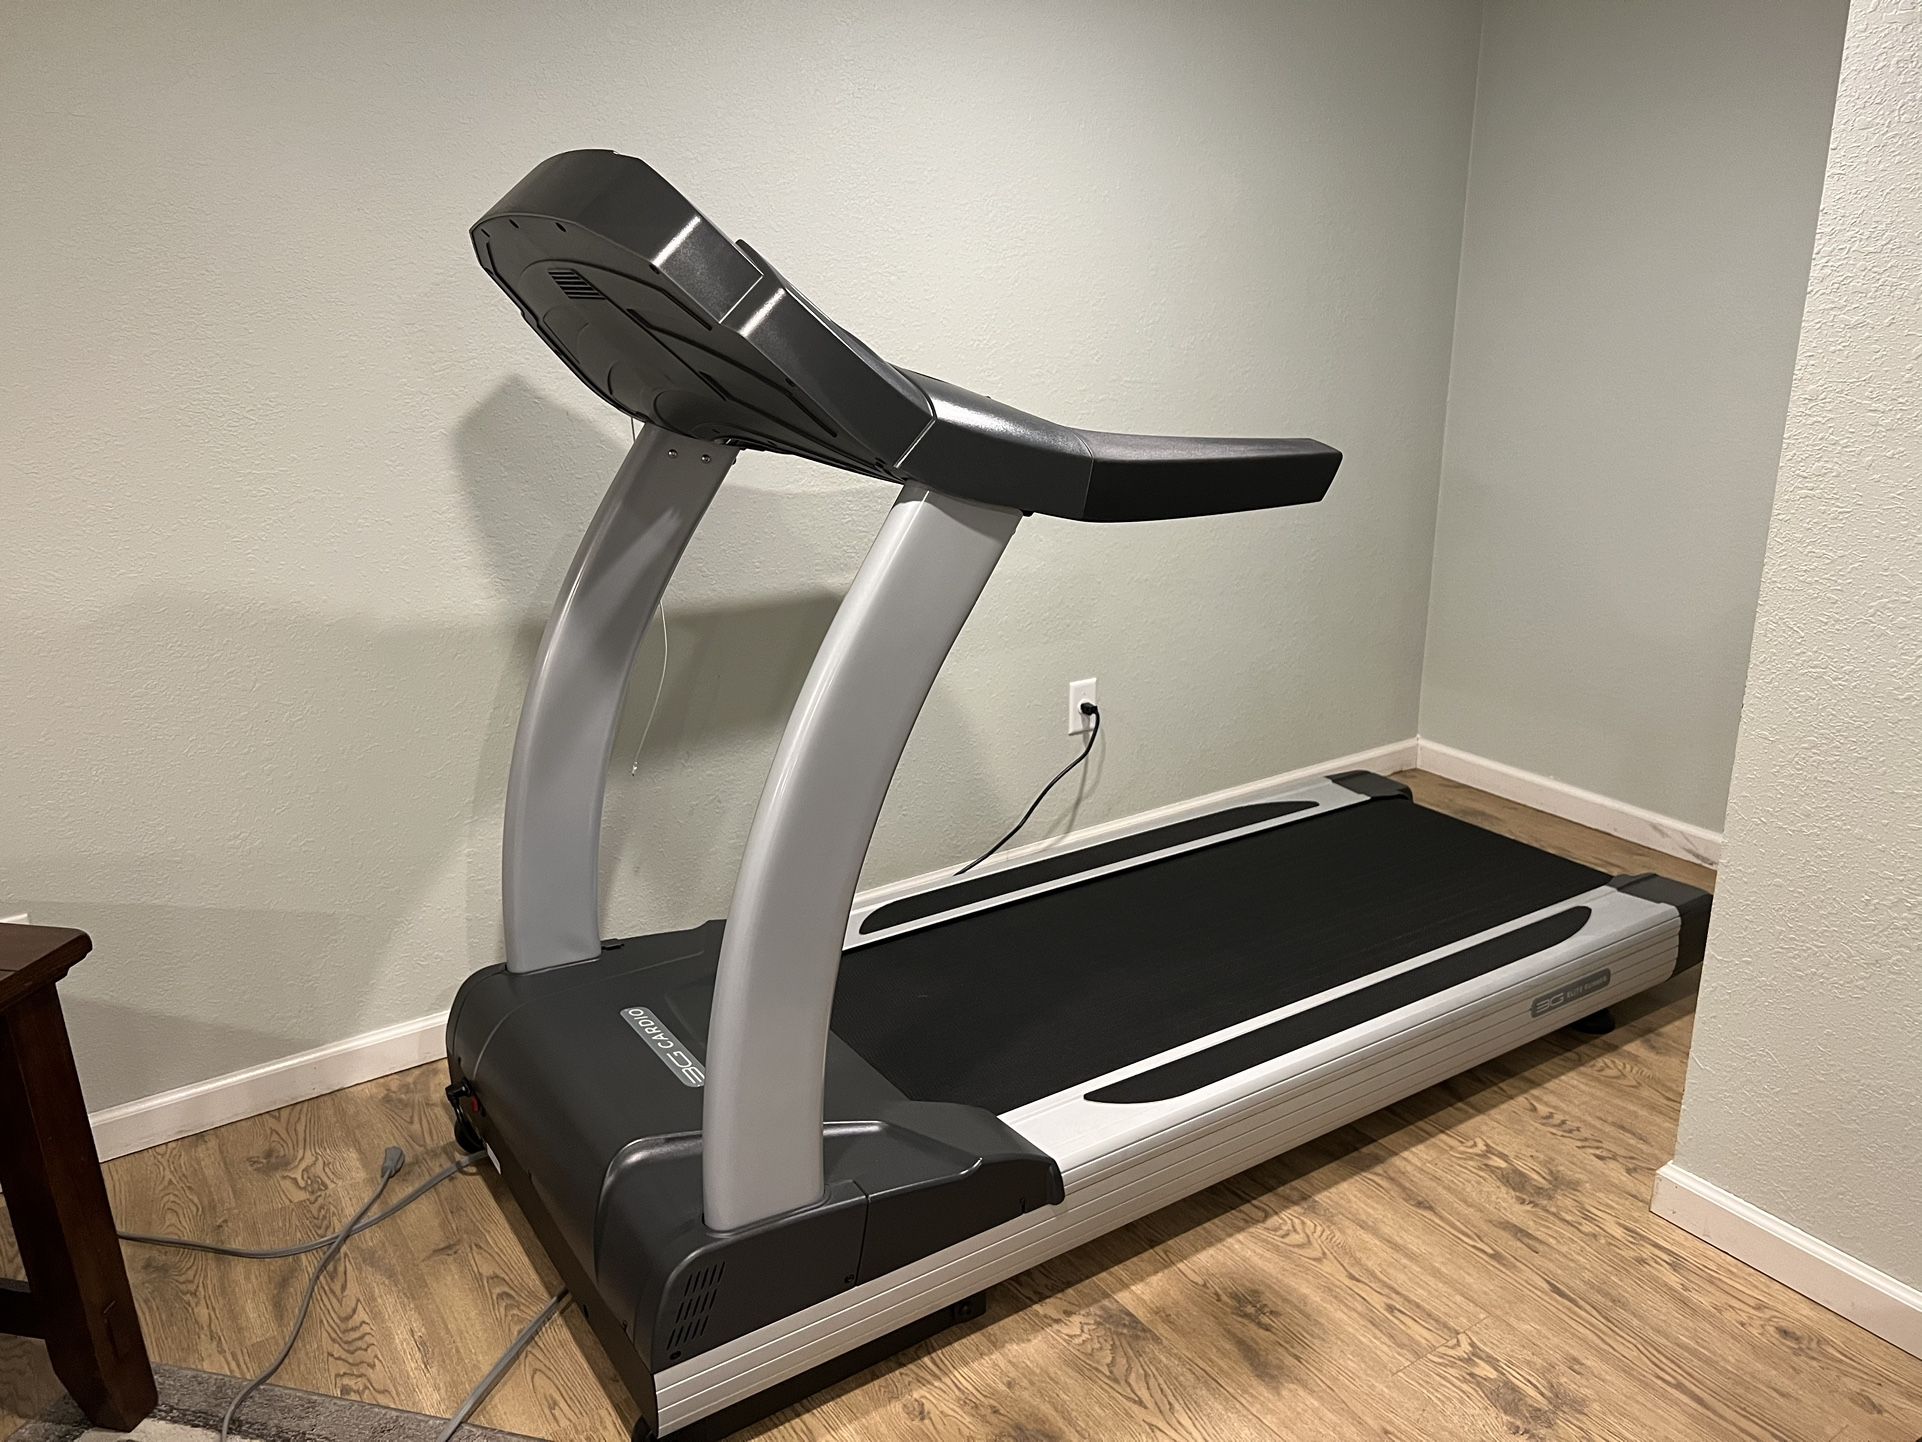 3G Cardio Elite Treadmill 